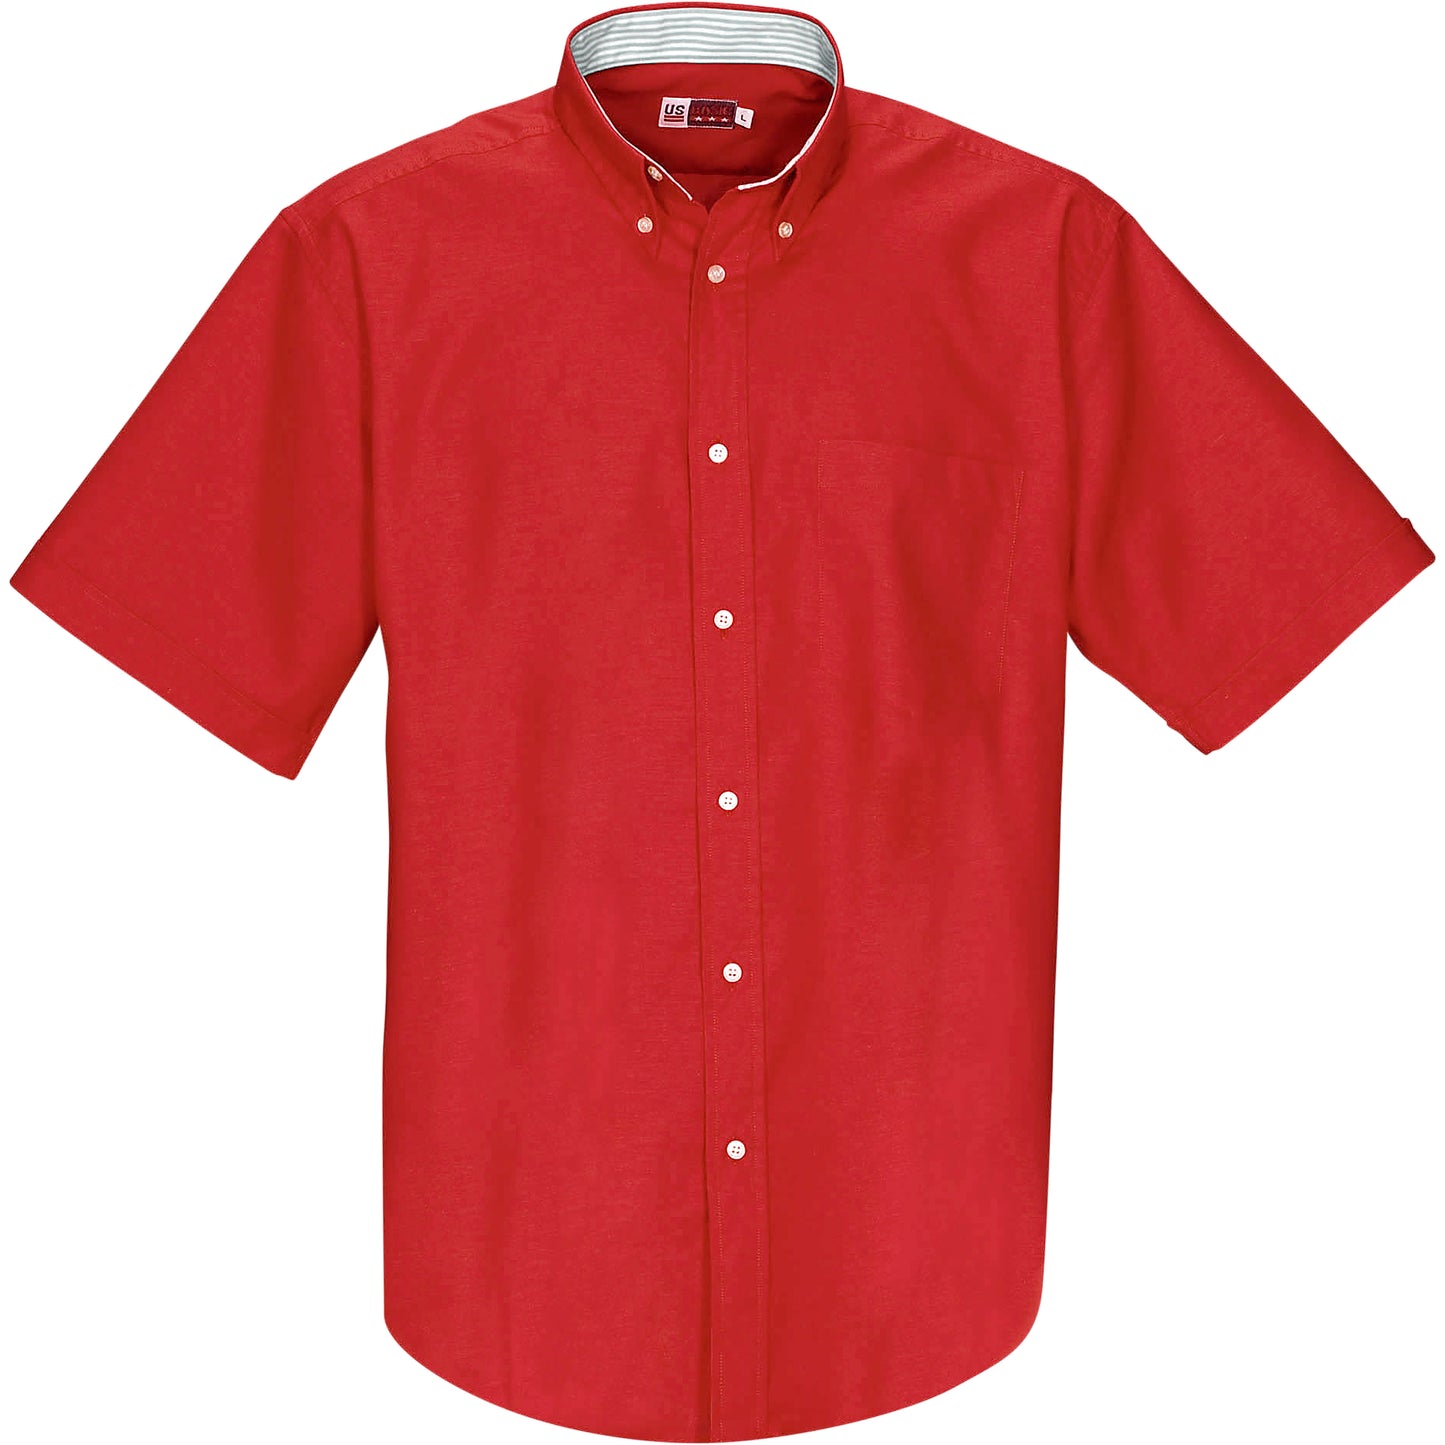 Mens Short Sleeve Aspen Shirt - Red Only